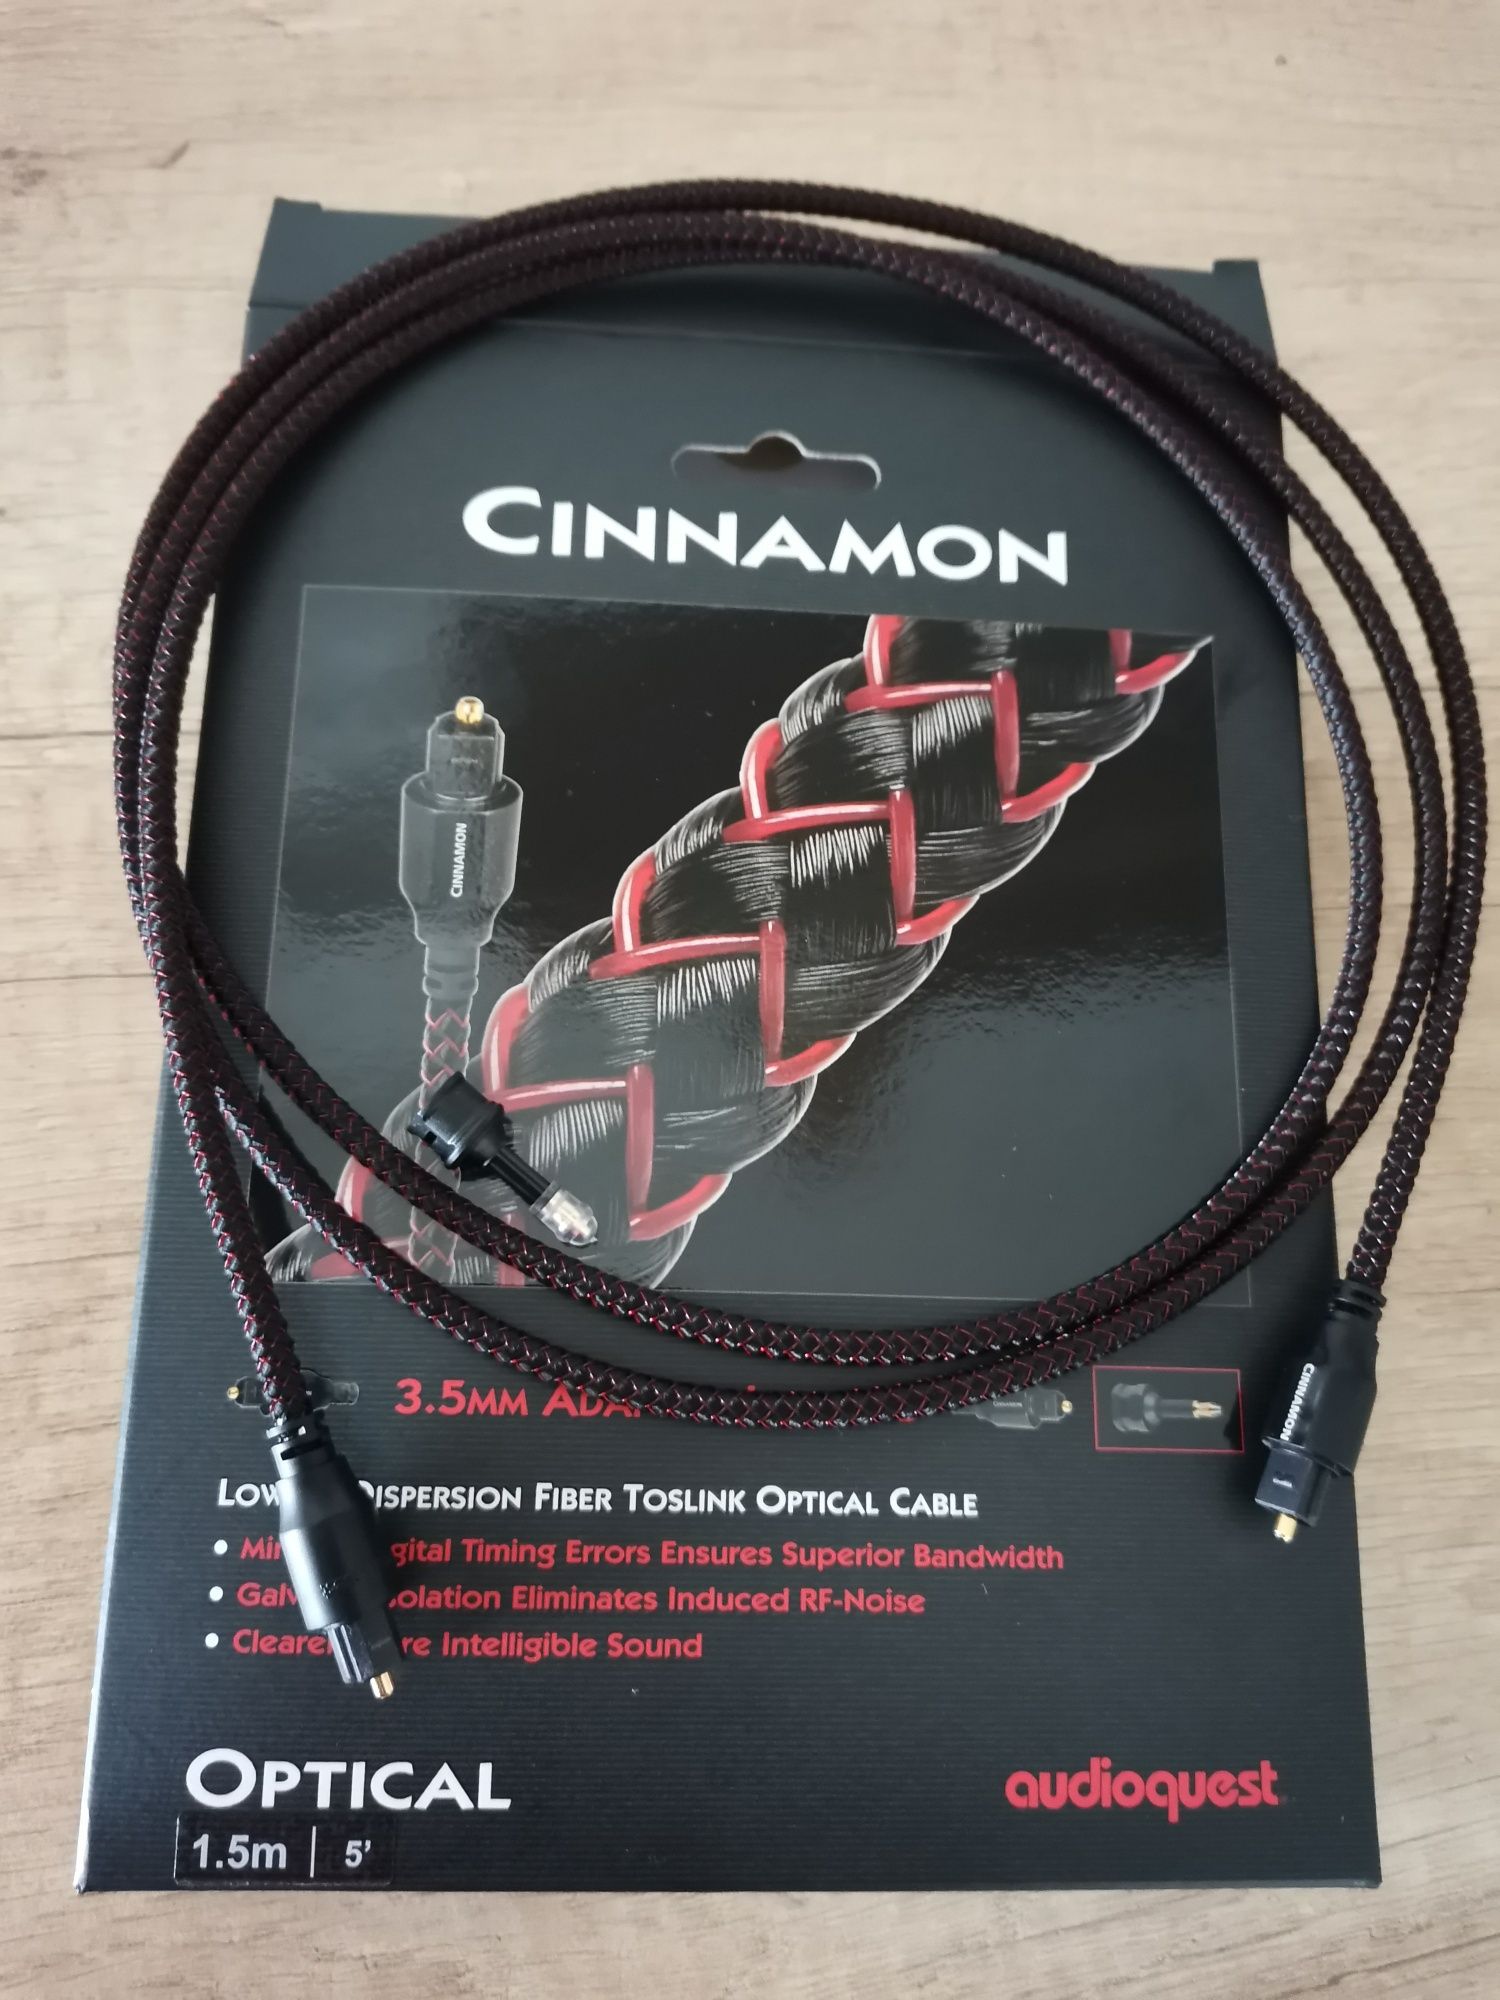 Vand/schimb cablu optic Audioquest Cinnamon optical